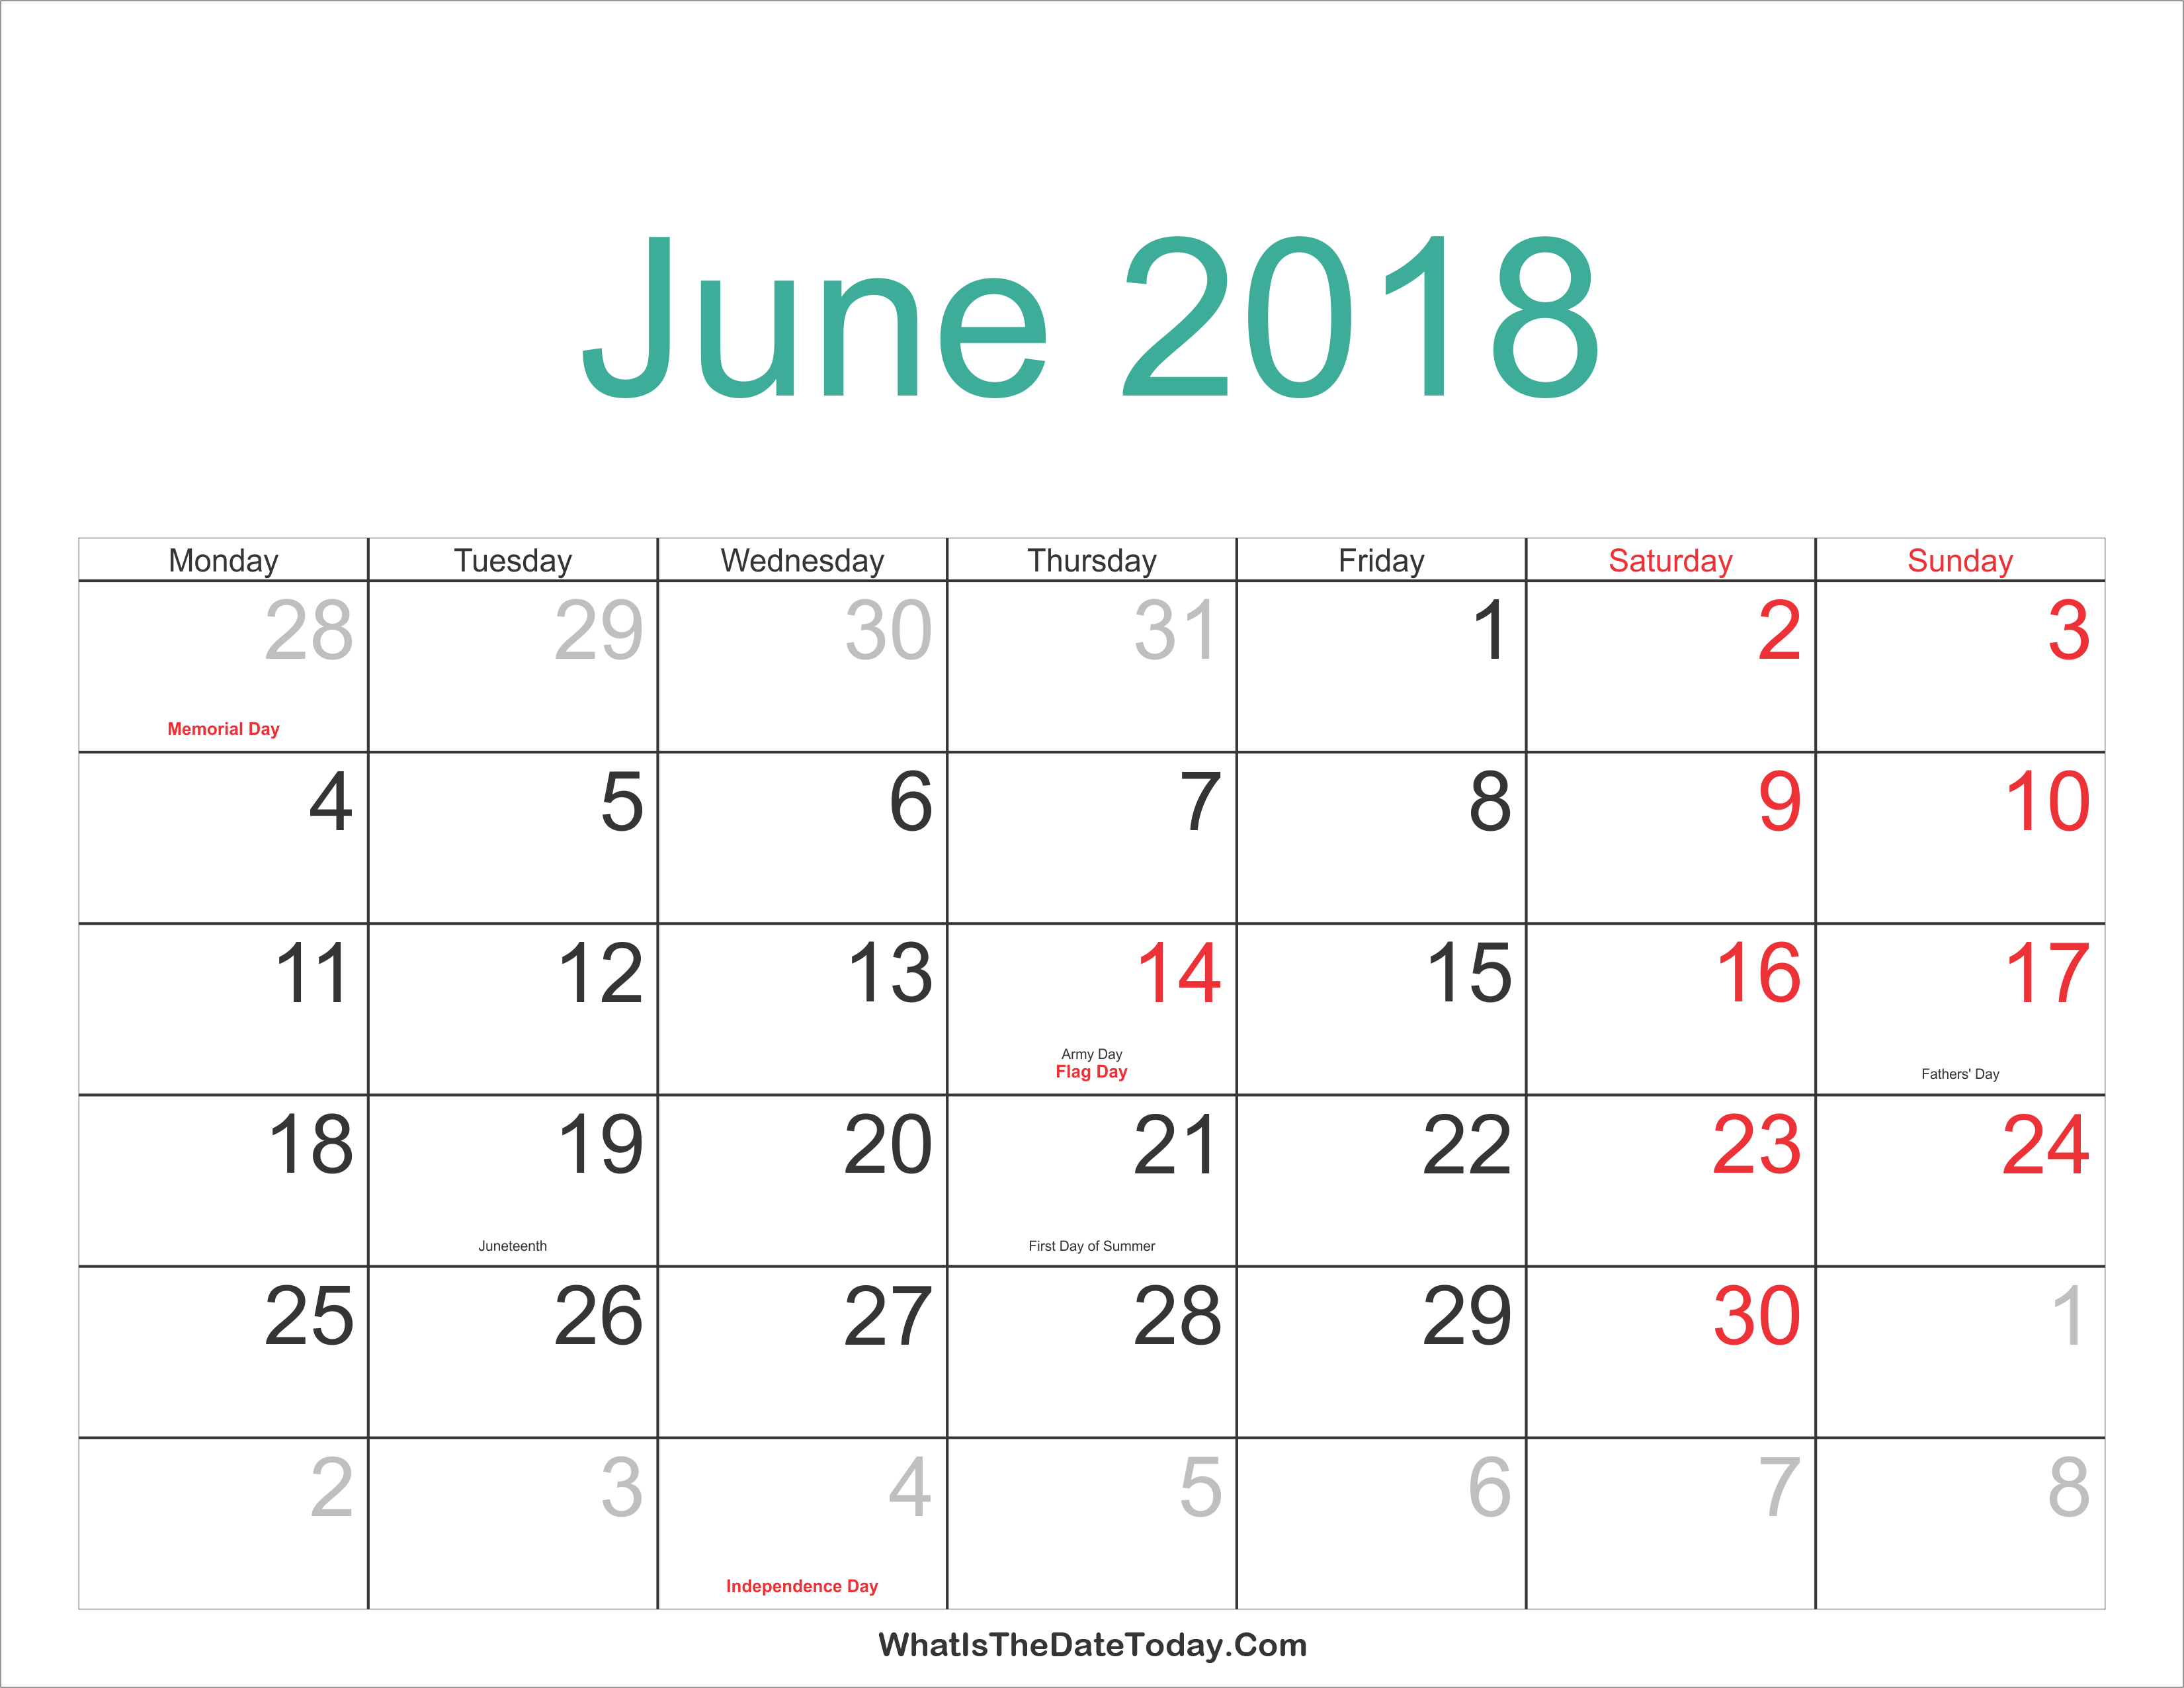 June 2018 Calendar Printable with Holidays Whatisthedatetoday Com